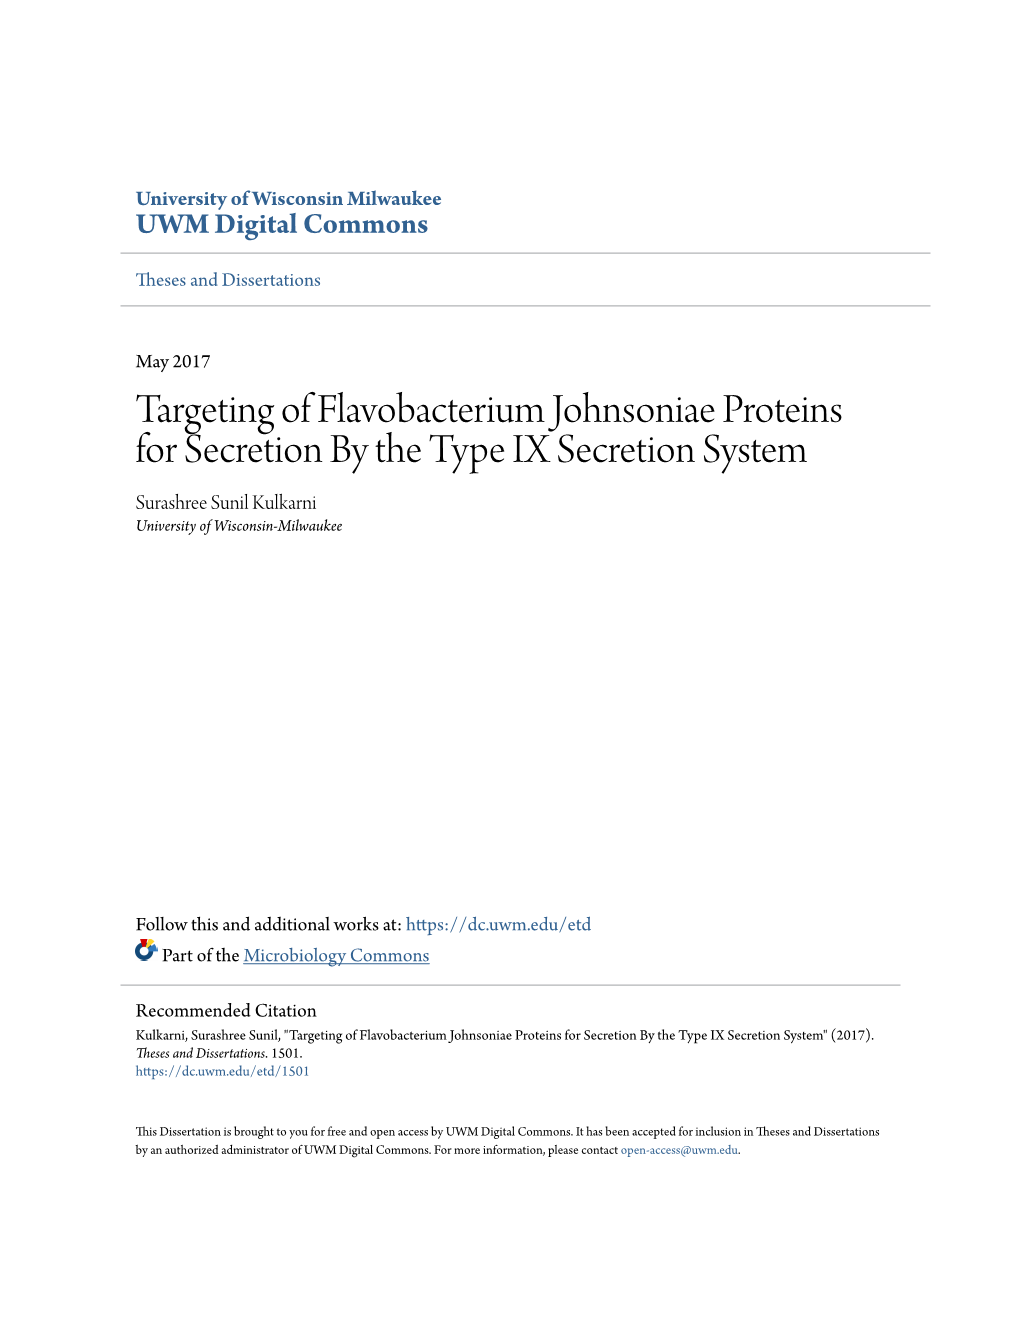 Targeting of Flavobacterium Johnsoniae Proteins for Secretion by the Type IX Secretion System Surashree Sunil Kulkarni University of Wisconsin-Milwaukee